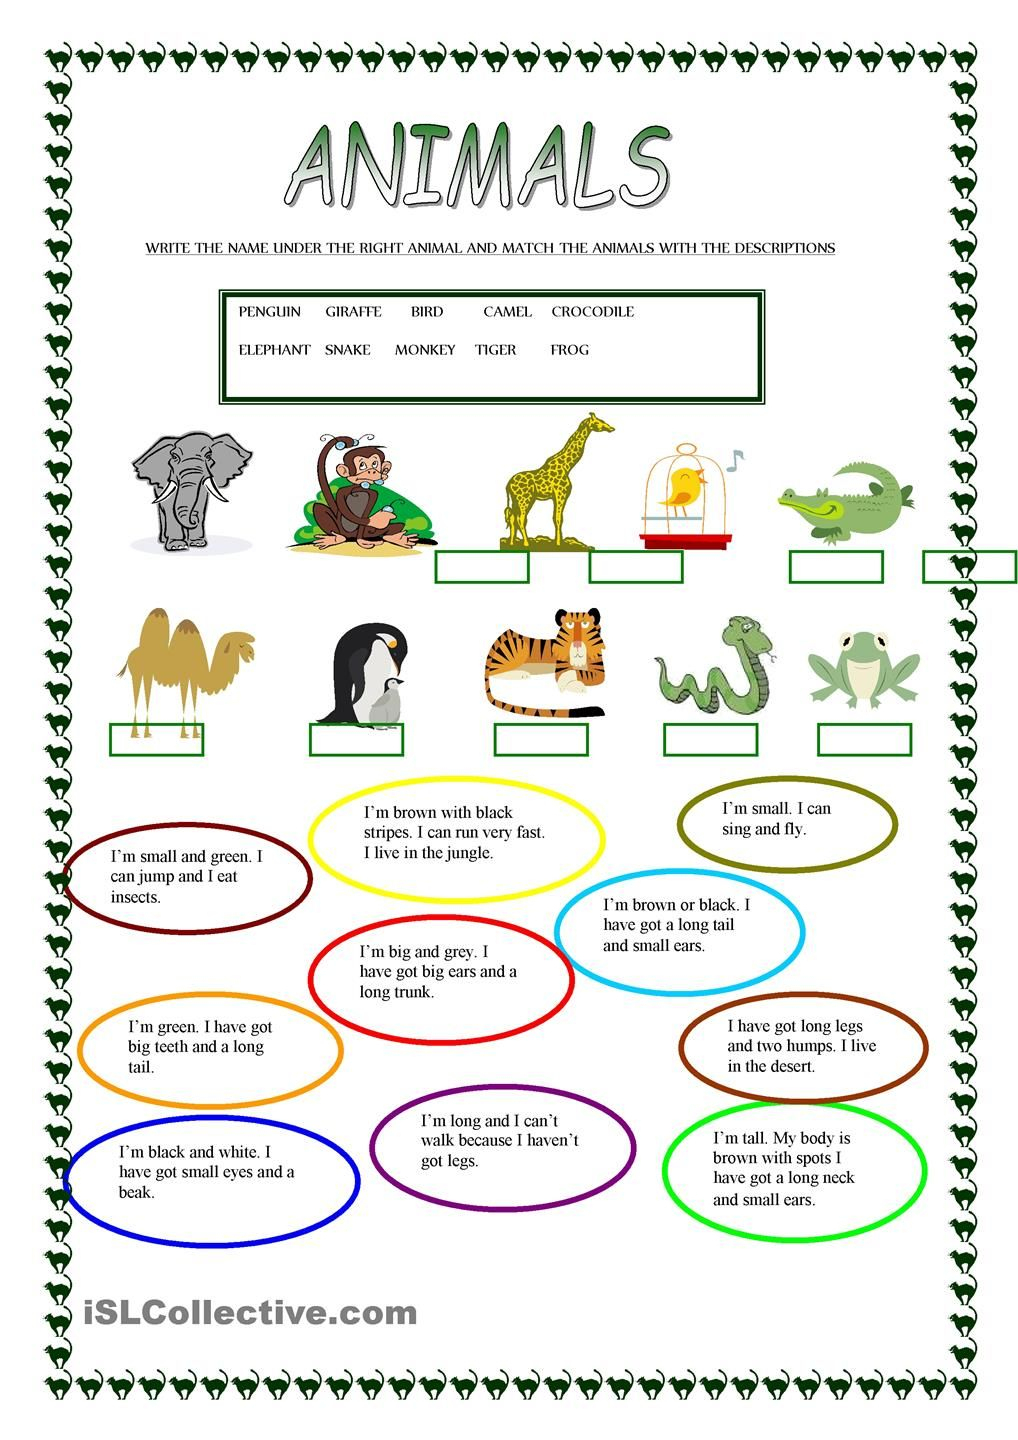 Animals | Free Esl Worksheets | Teachers Resources | Pinterest - Free Printable Esl Resources